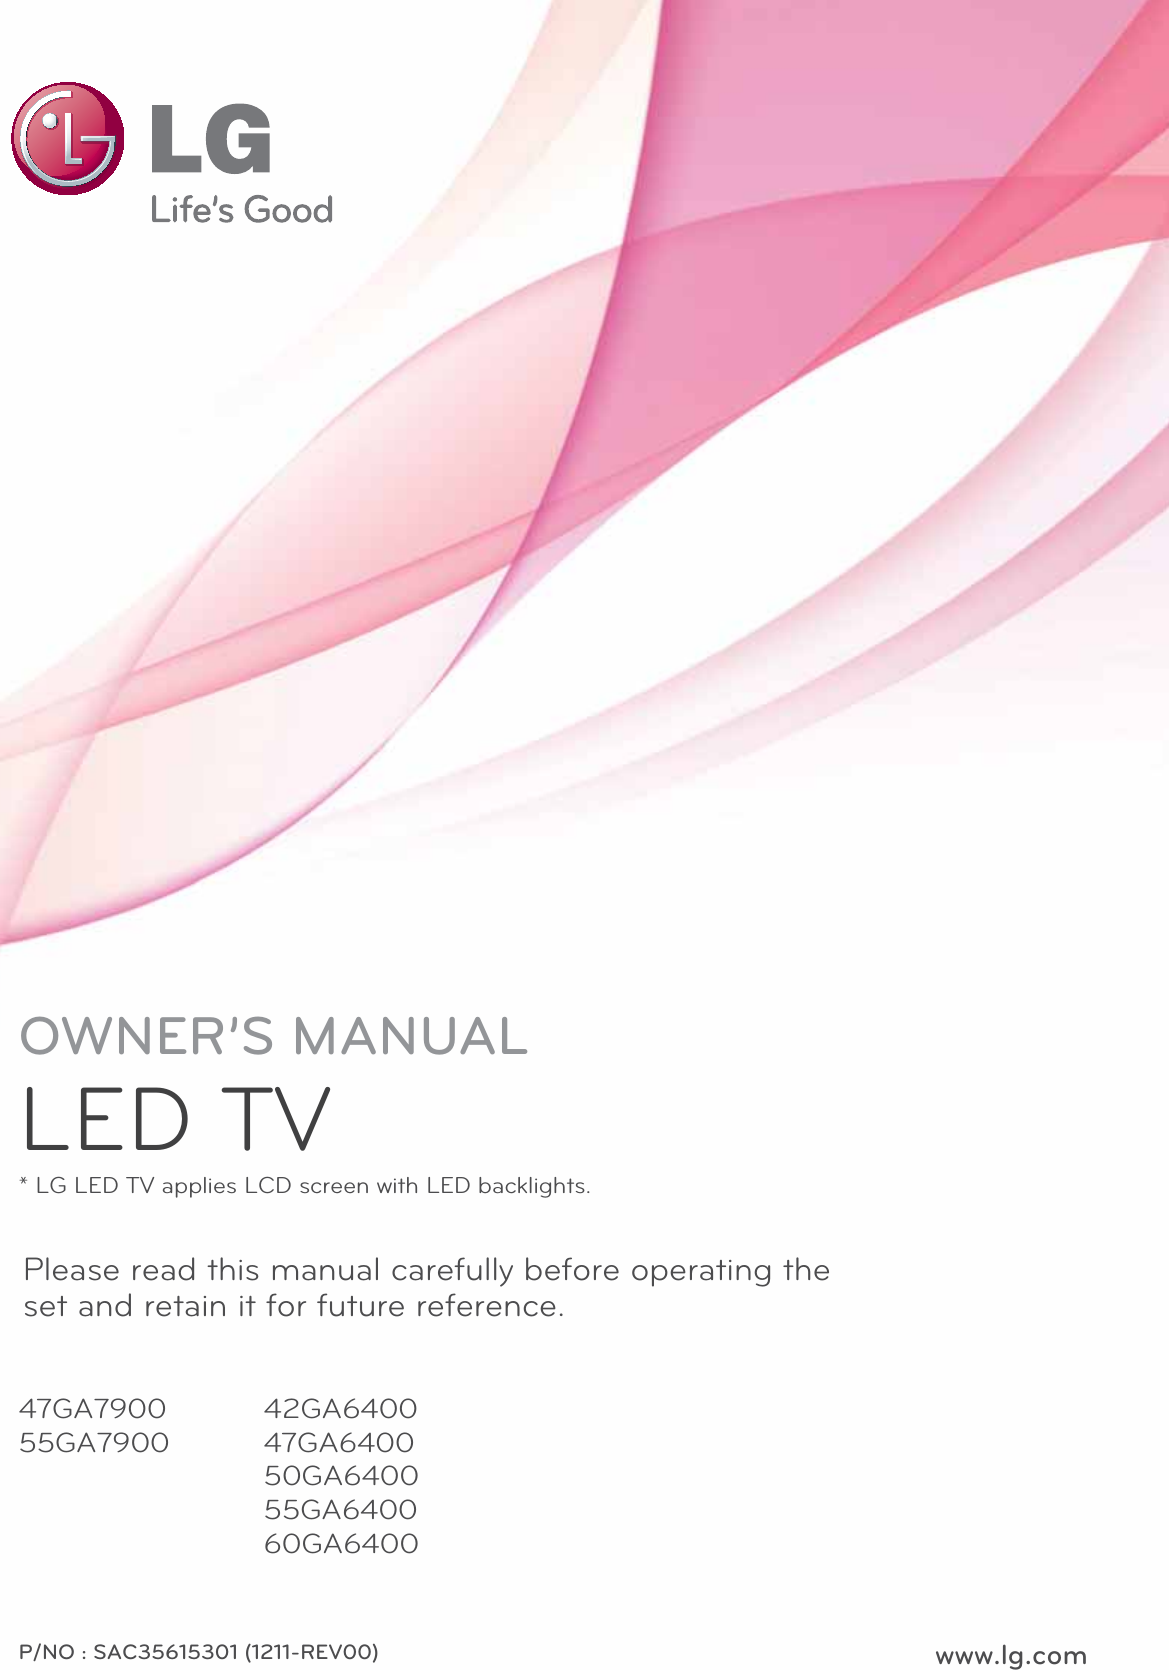 OWNER’S MANUALLED TV* LG LED TV applies LCD screen with LED backlights.Please read this manual carefully before operating the set and retain it for future reference.P/NO : SAC35615301 (1211-REV00) www.lg.com42GA640047GA640050GA640055GA640060GA640047GA790055GA7900